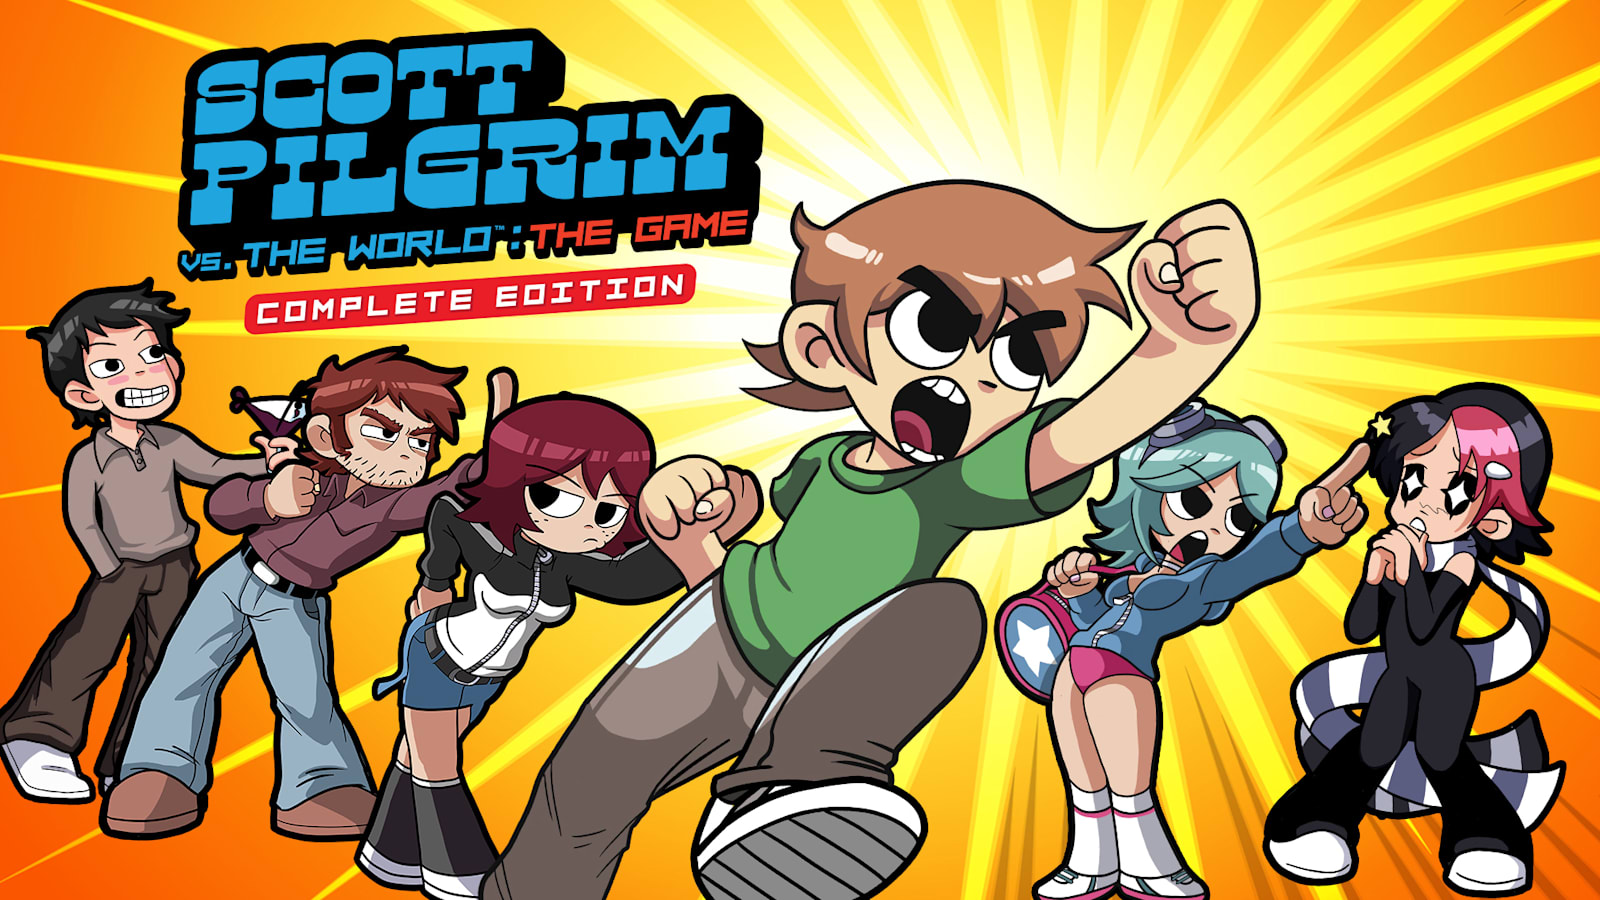 Scott Pilgrim vs. The World The Game: Complete Edition (Nintendo Switch Digital Download) $4.89